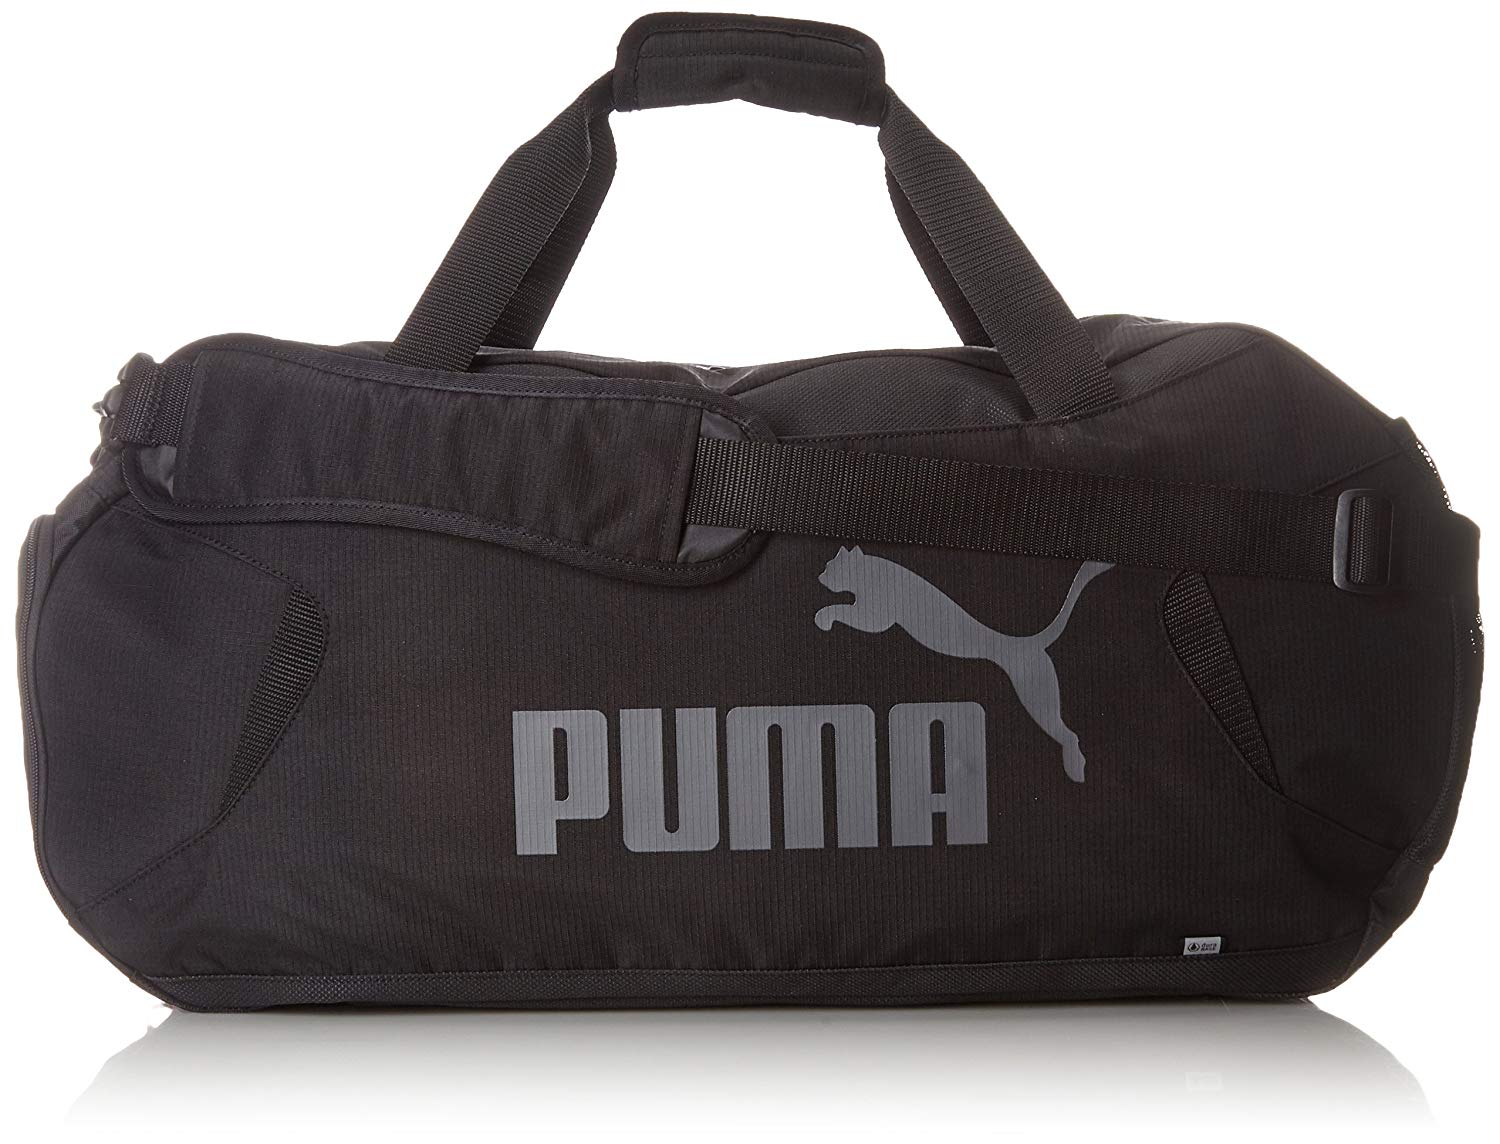 Bolsa deportiva Puma unisex solo 22€